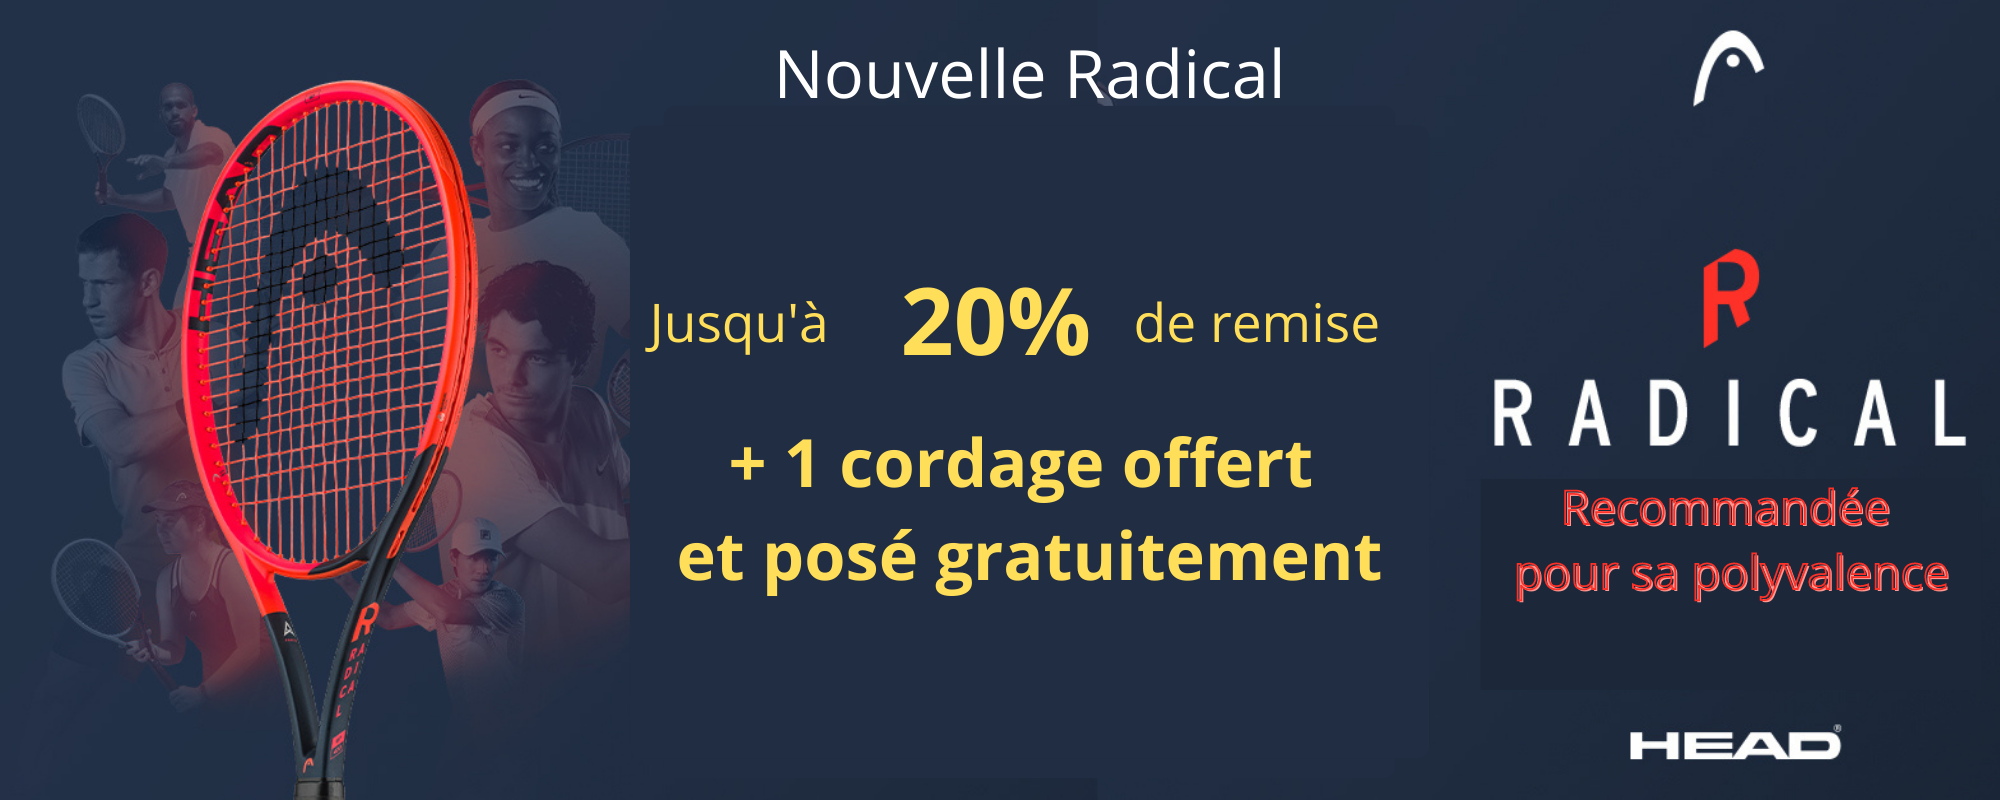 Offre Nouvelles Radical8